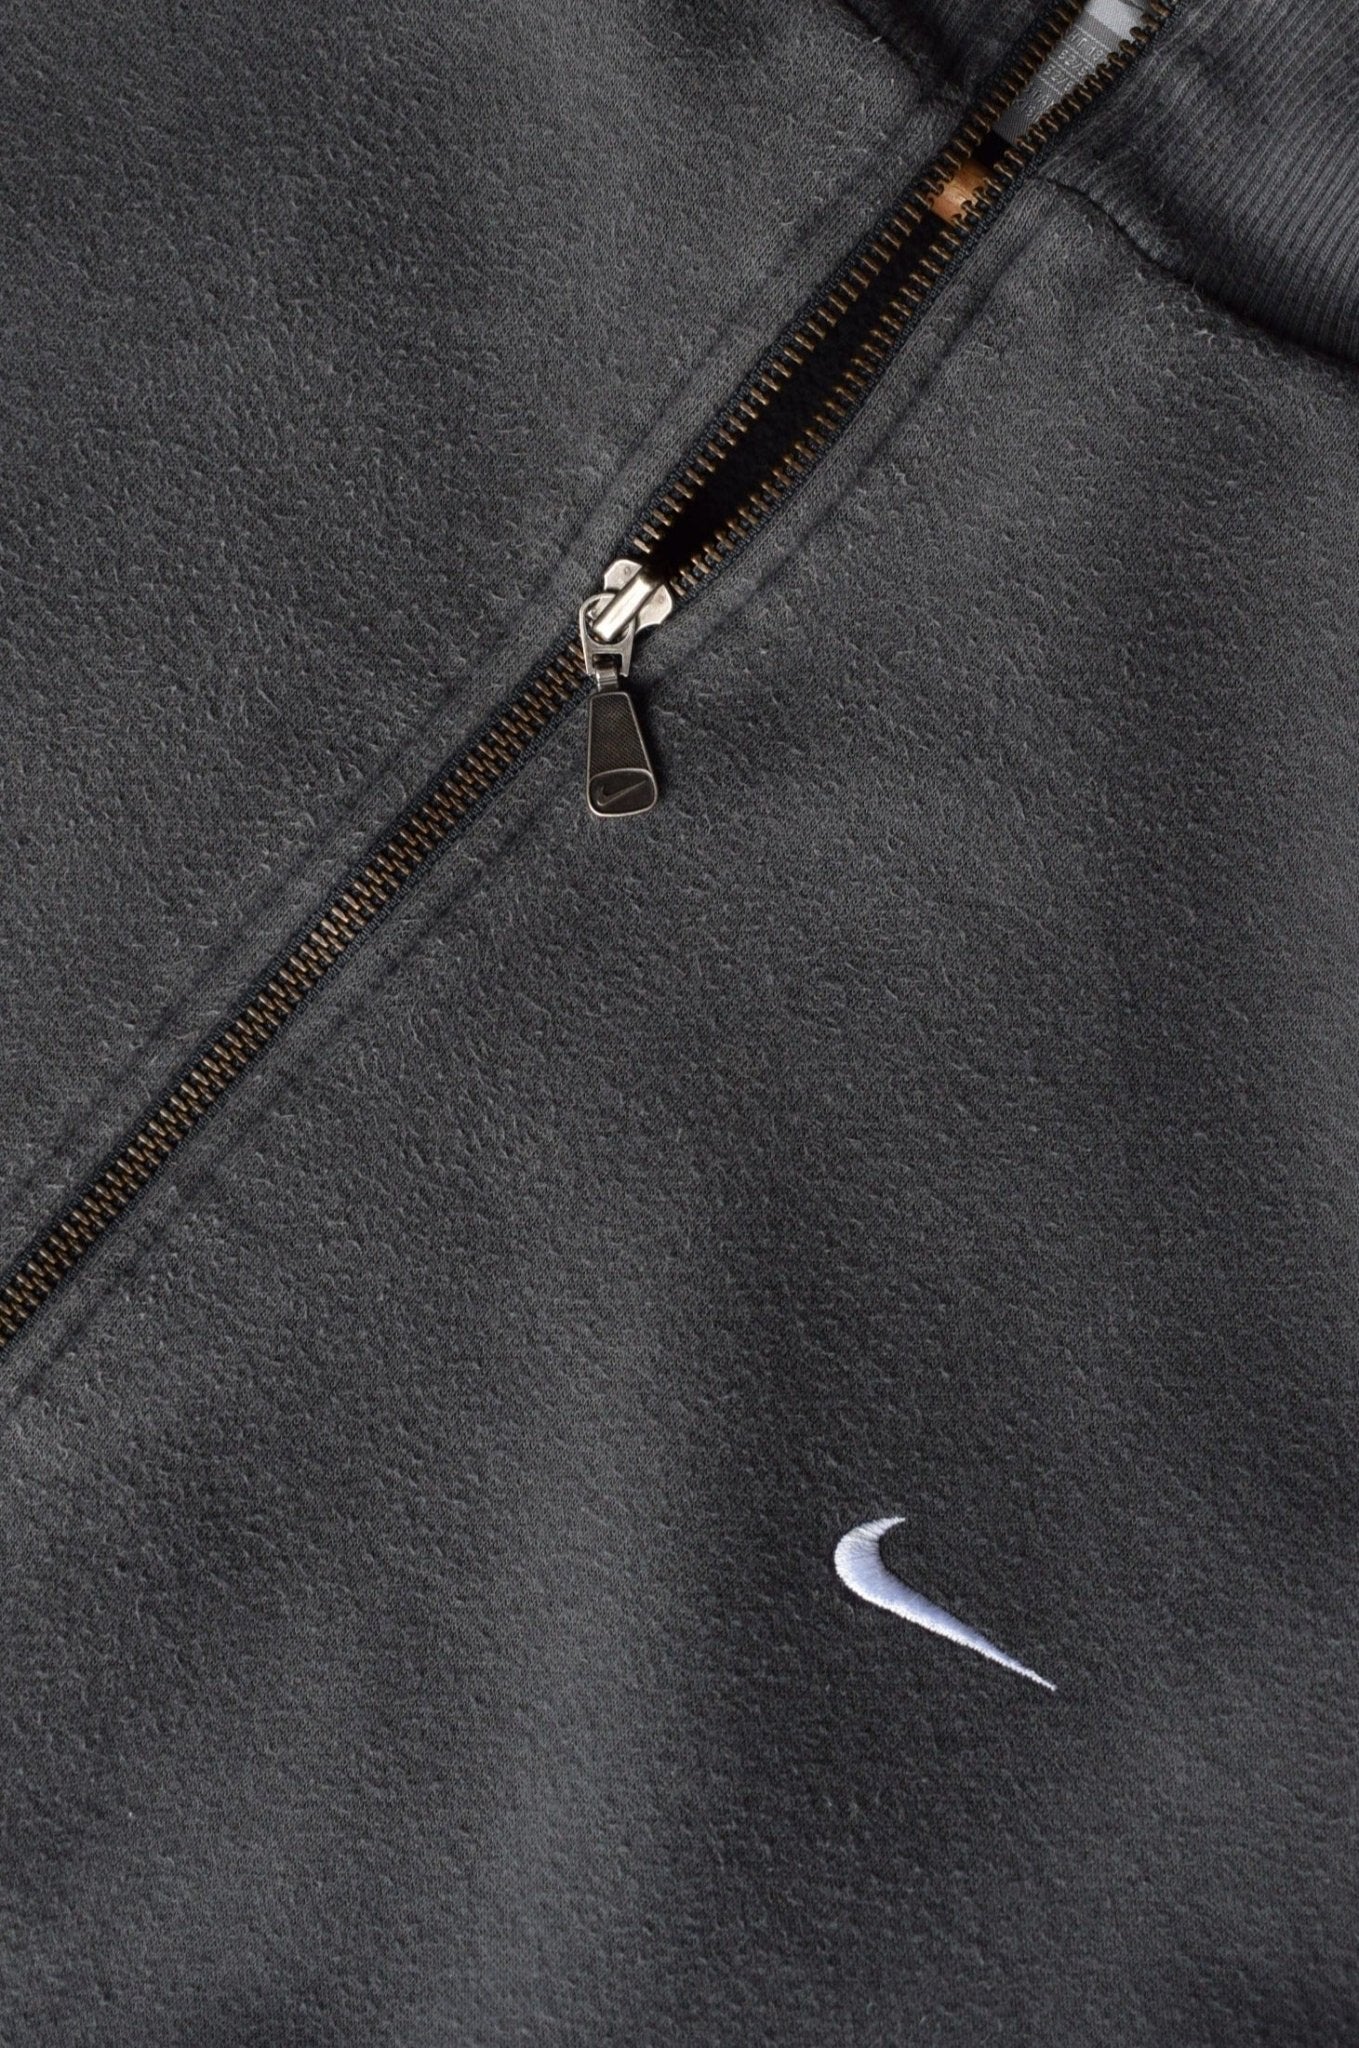 Vintage Nike Classic Logo Embroidered Jacket (L/XL) - Retrospective Store